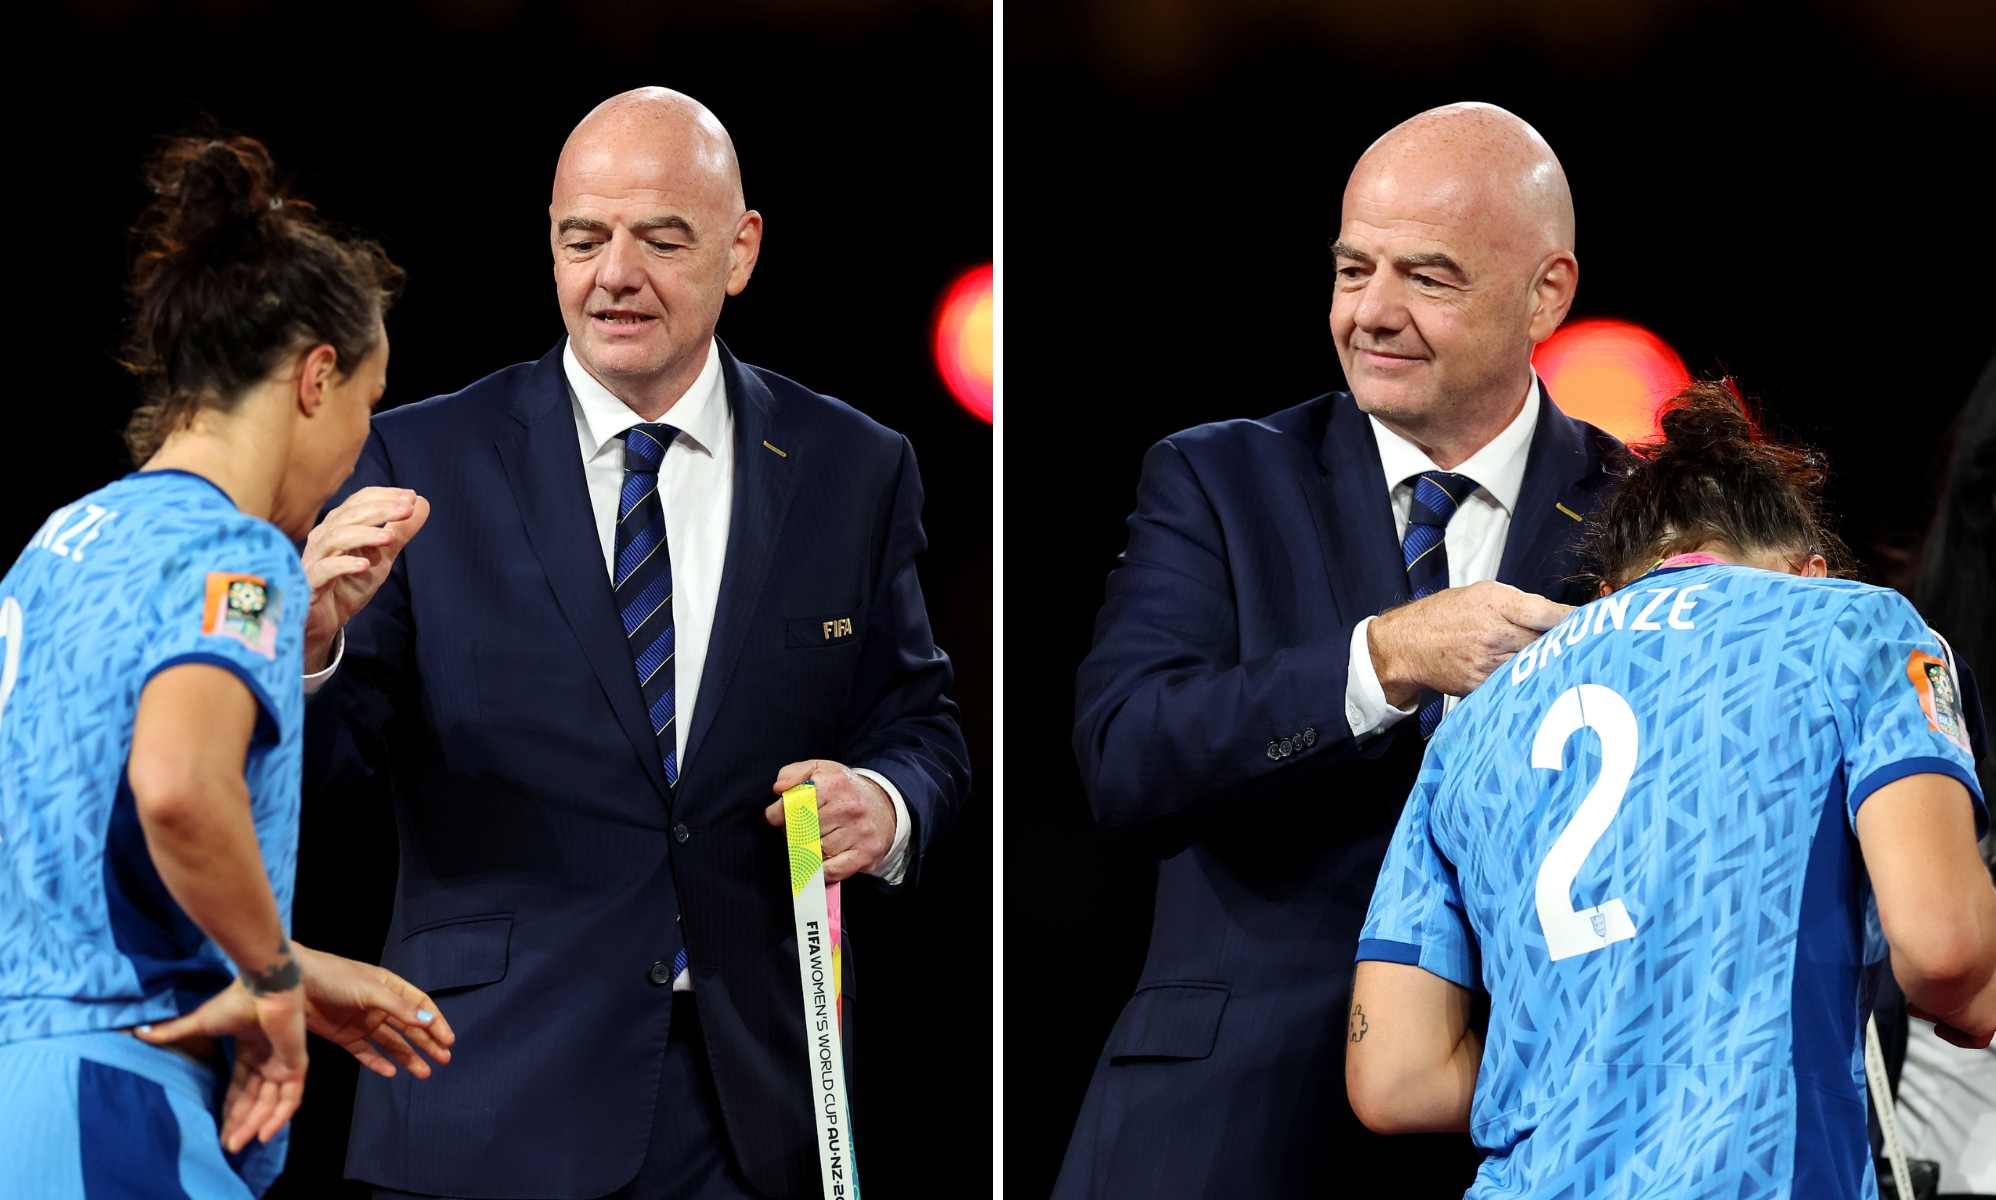 Lucy Bronze snubs FIFA boss handshake after World Cup final